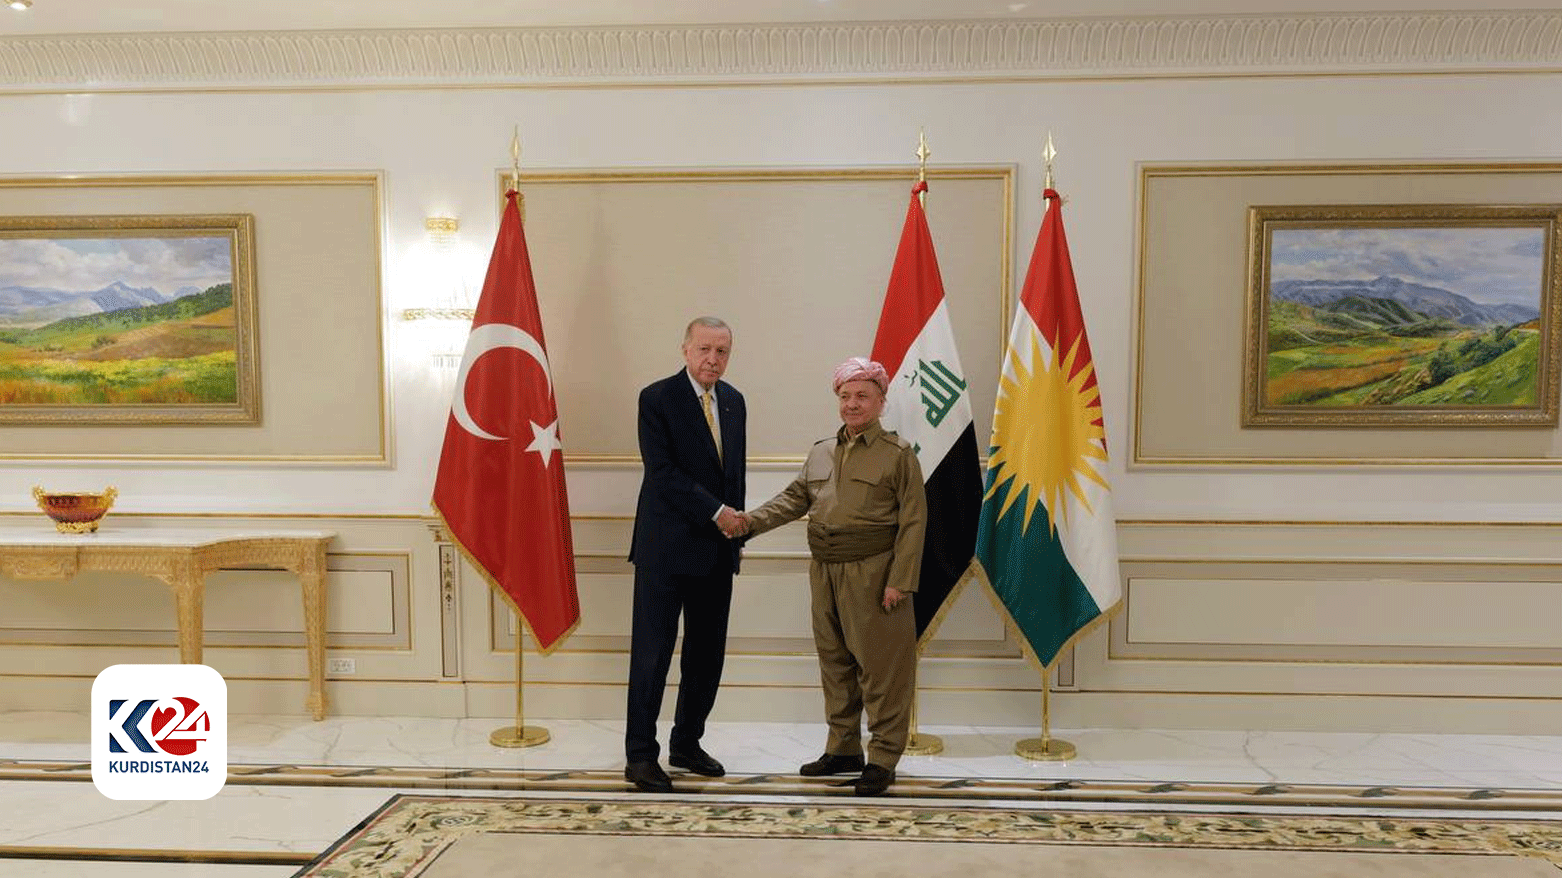 KDP President Masoud Barzani receives Erdogan